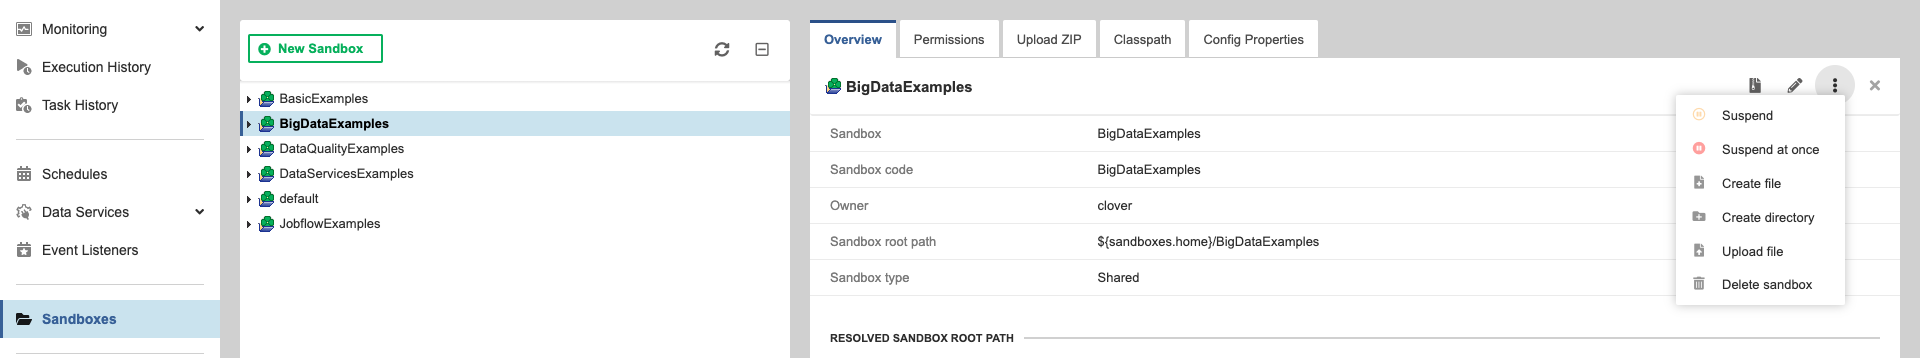 sandboxes file operations menu